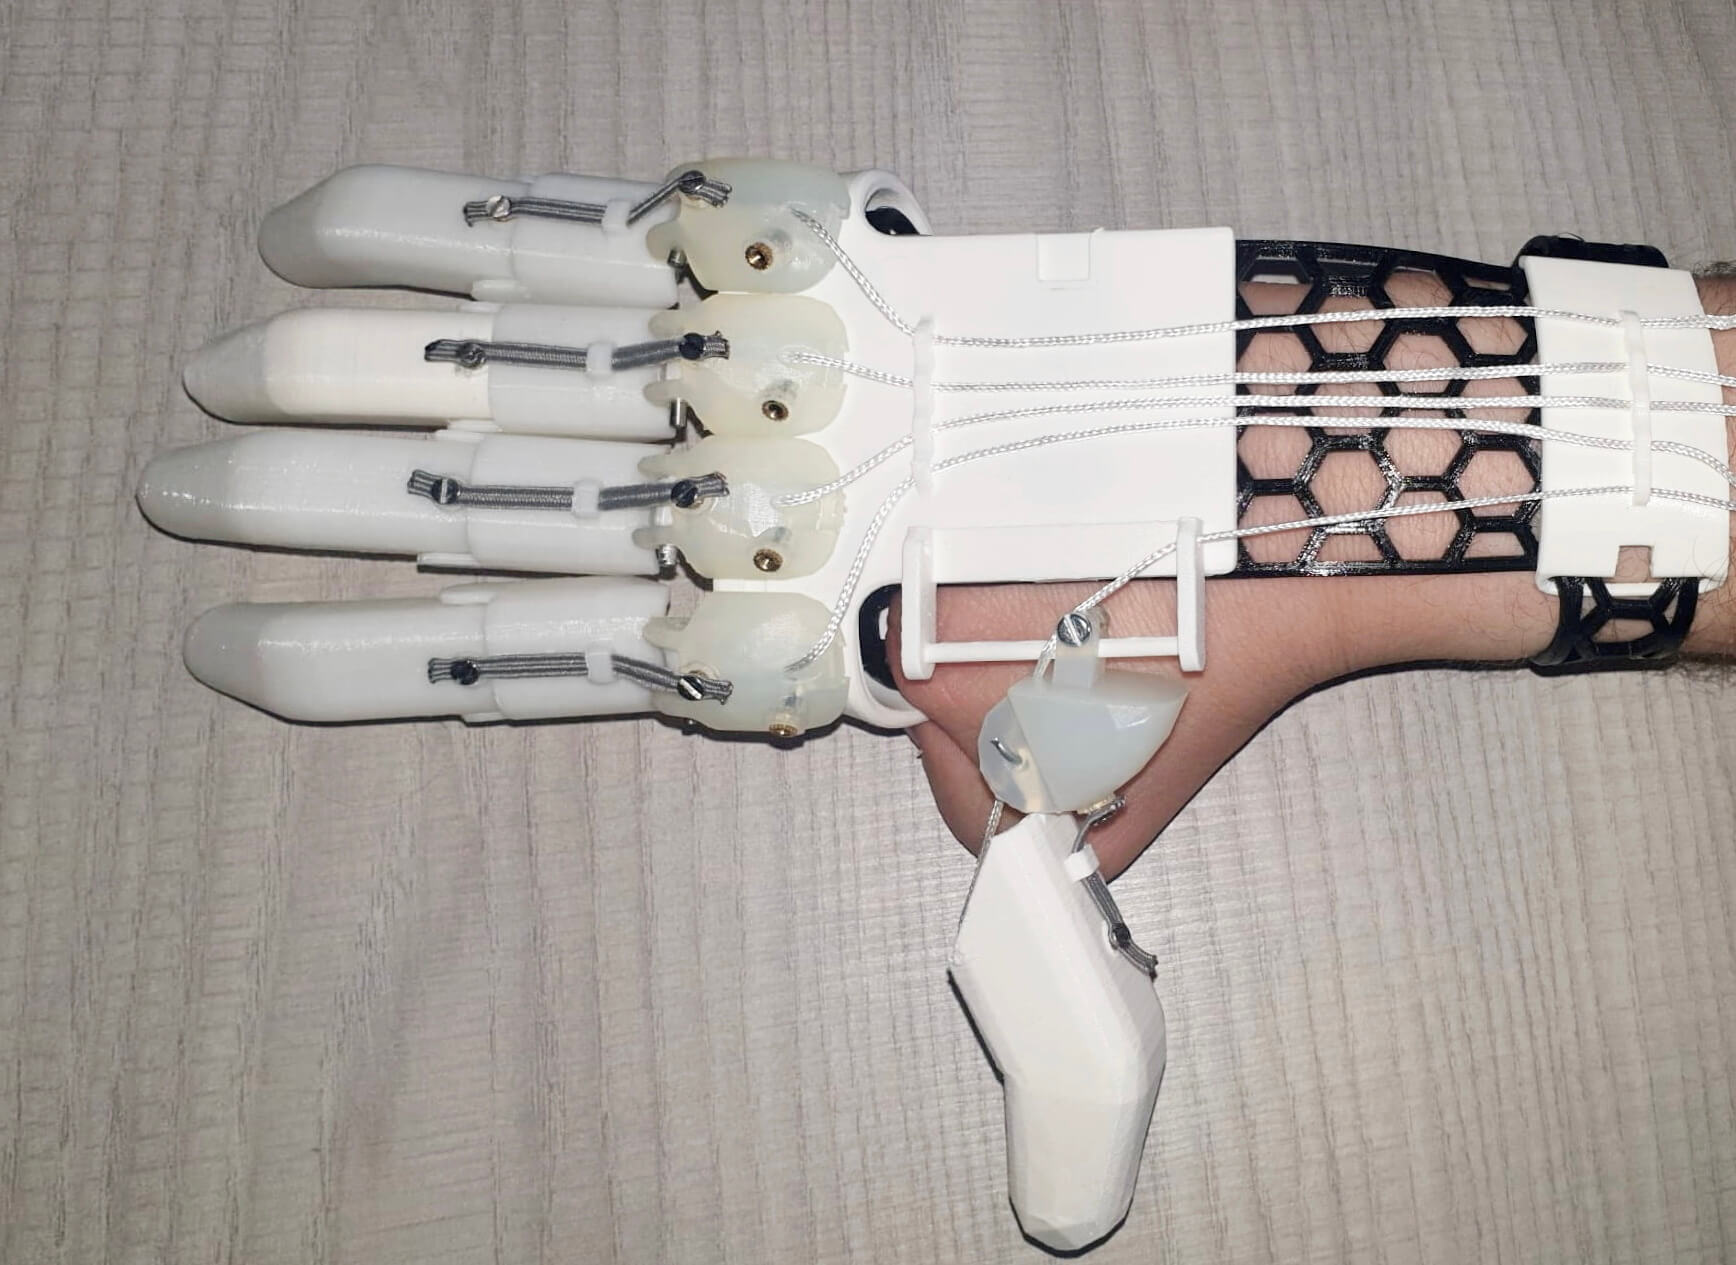 Luke Cox's prosthetic hand prototype.